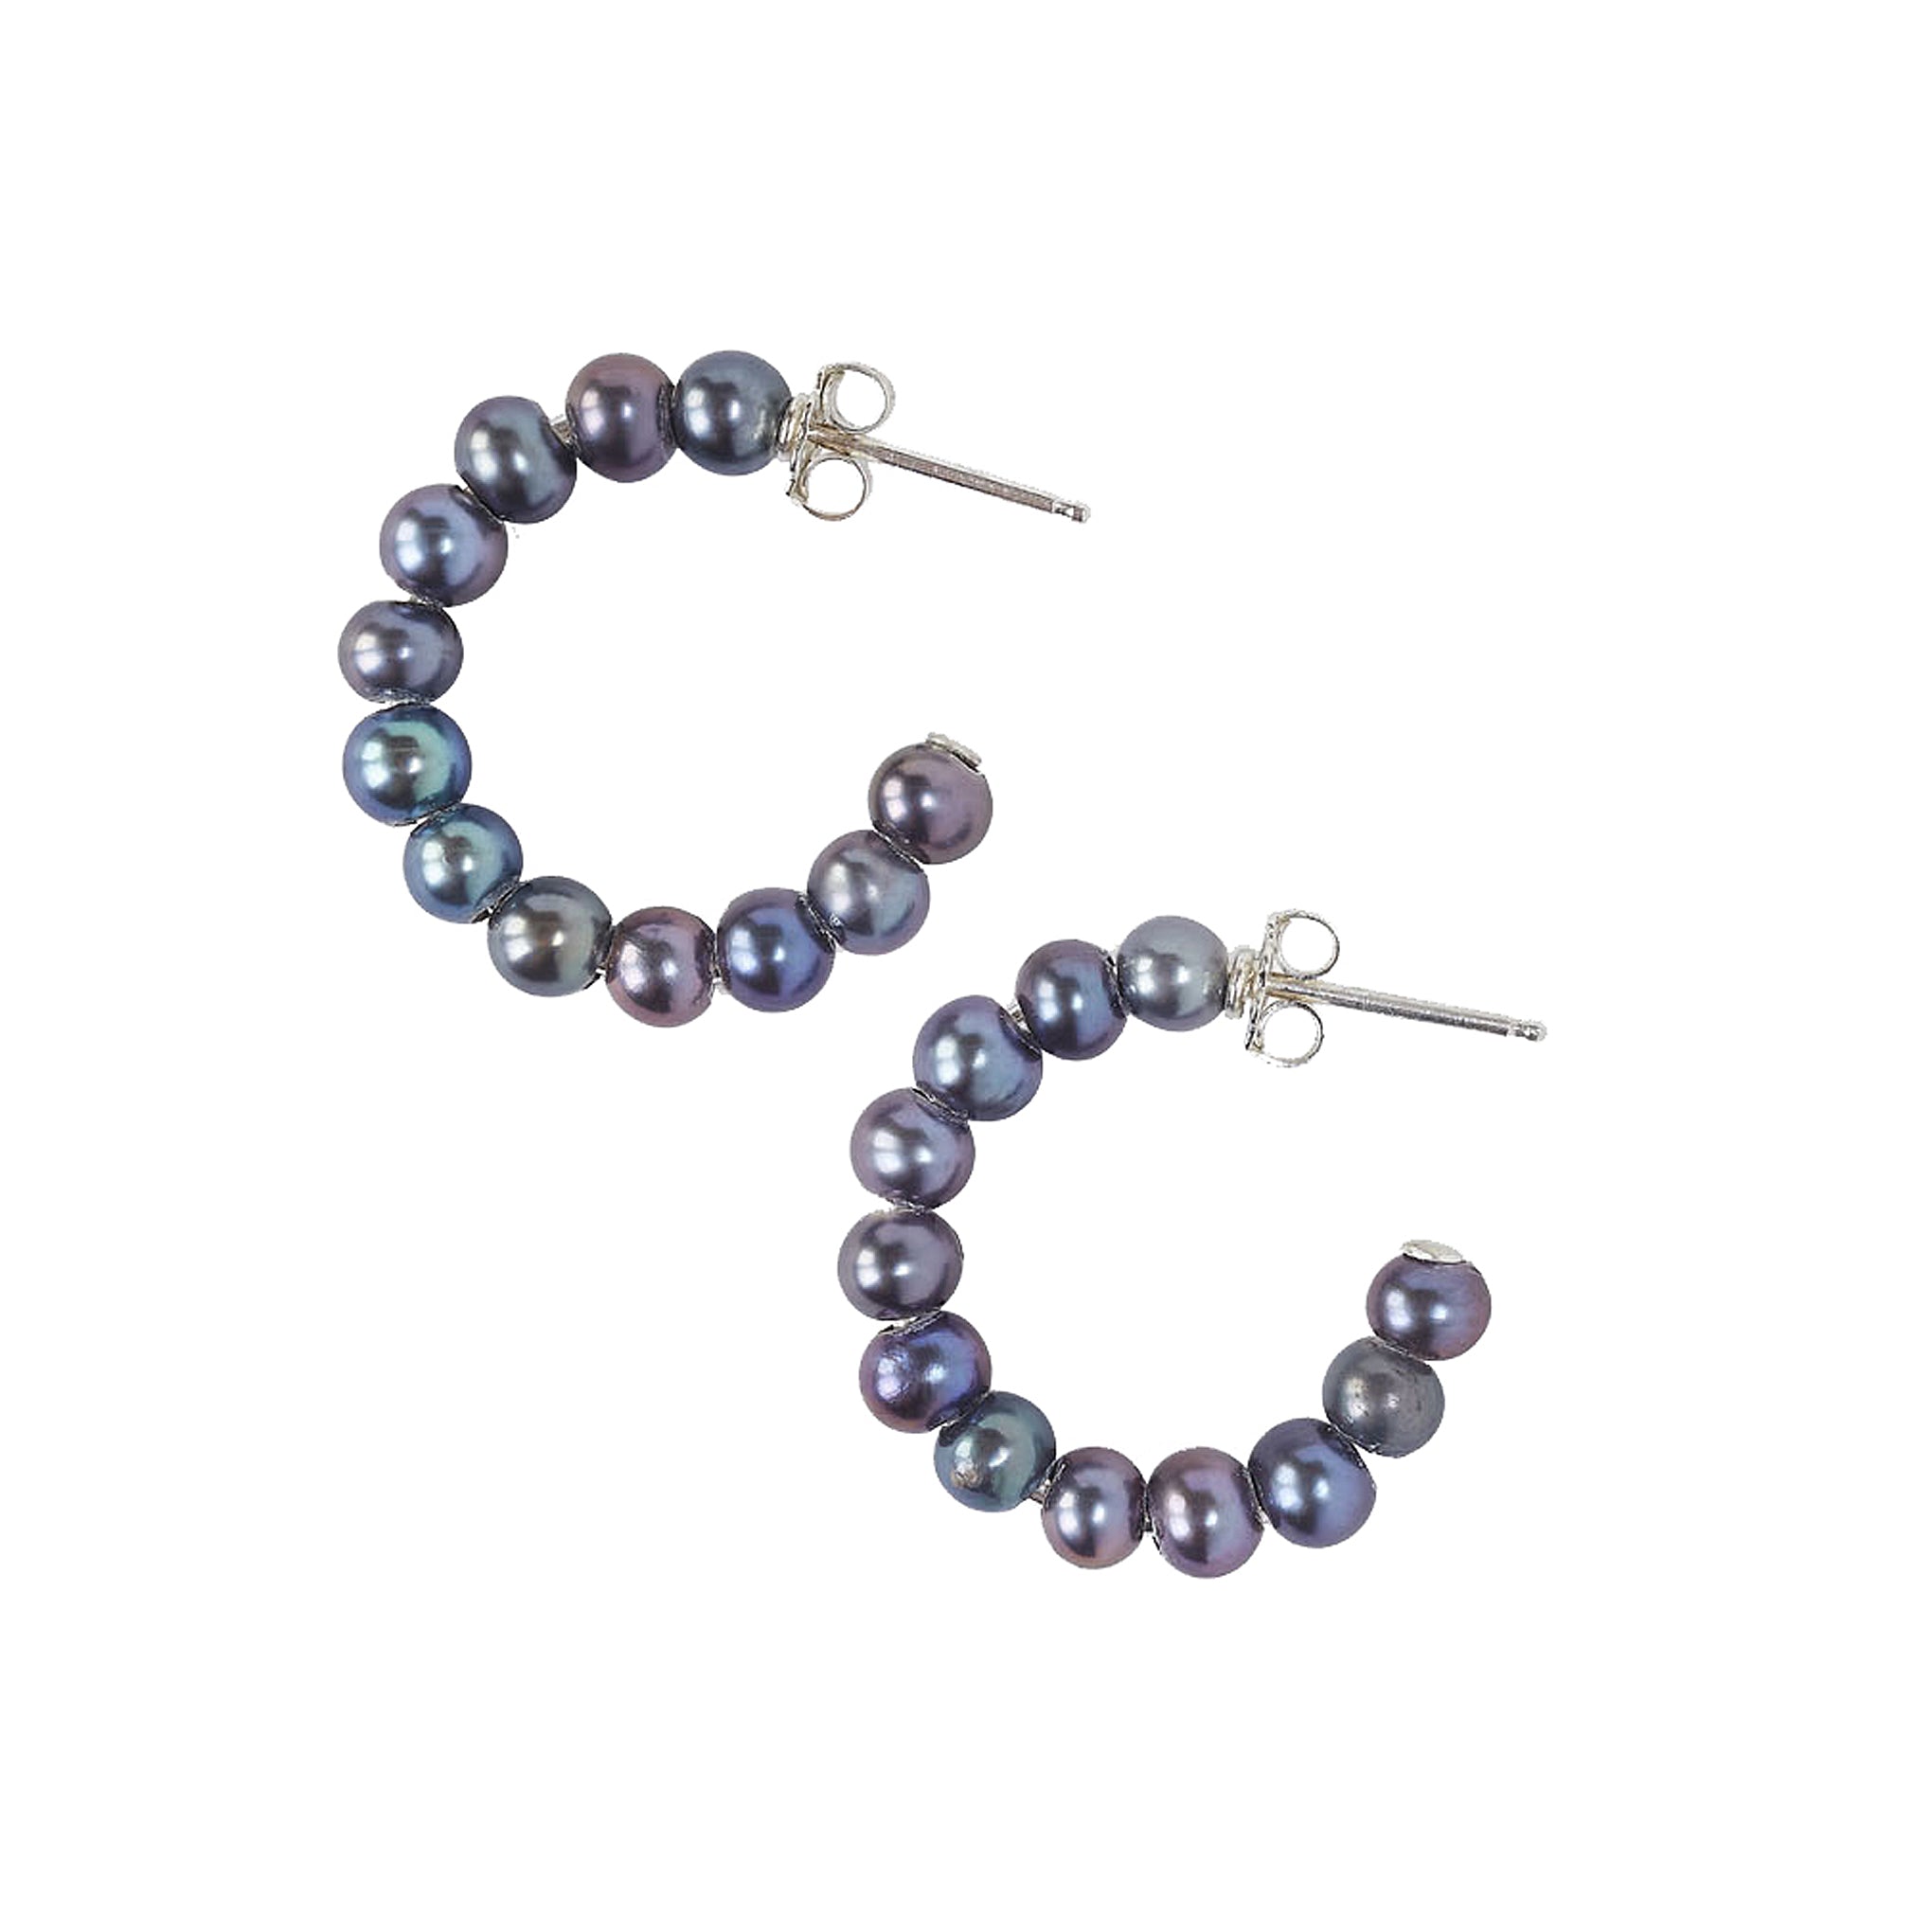 Chan Luu Small Holly Hoop Earrings in Peacock Pearl and Sterling Silver